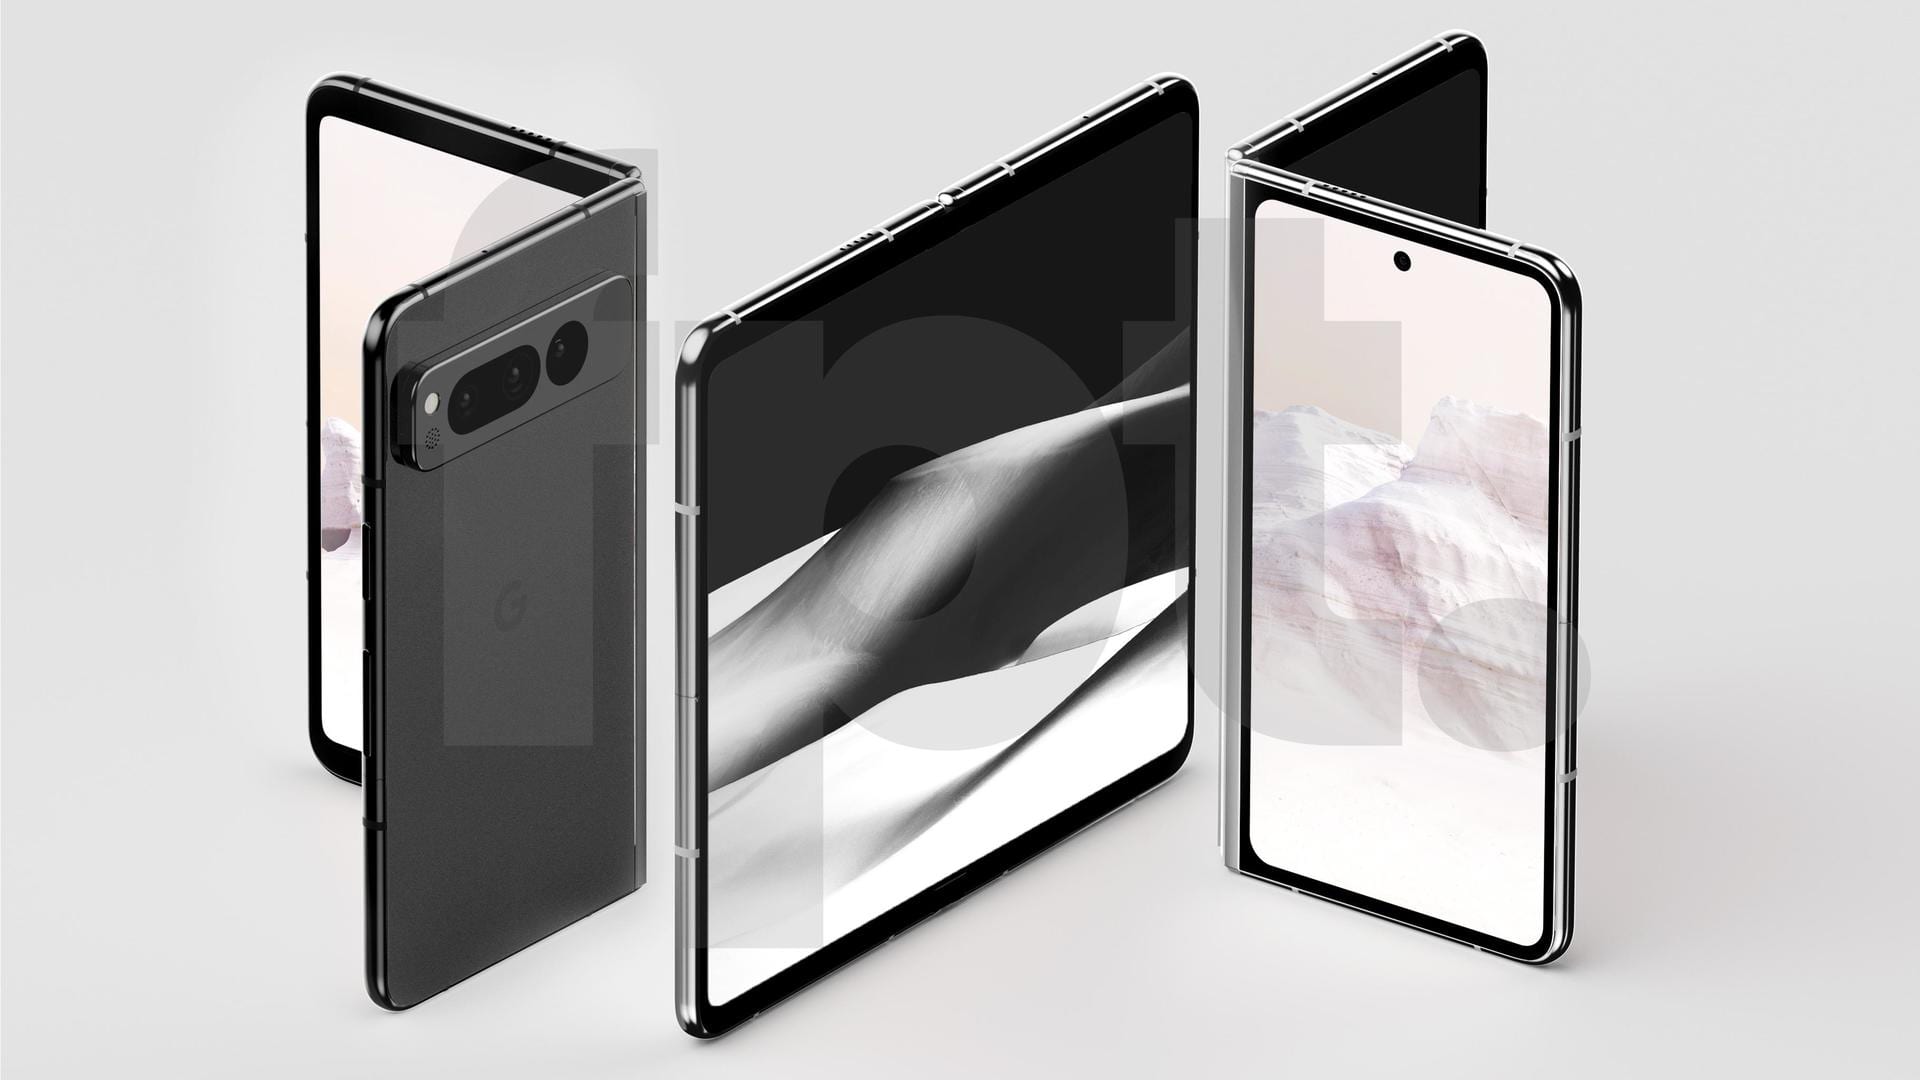 Fresh leak reveals more details about Google's maiden foldable smartphone